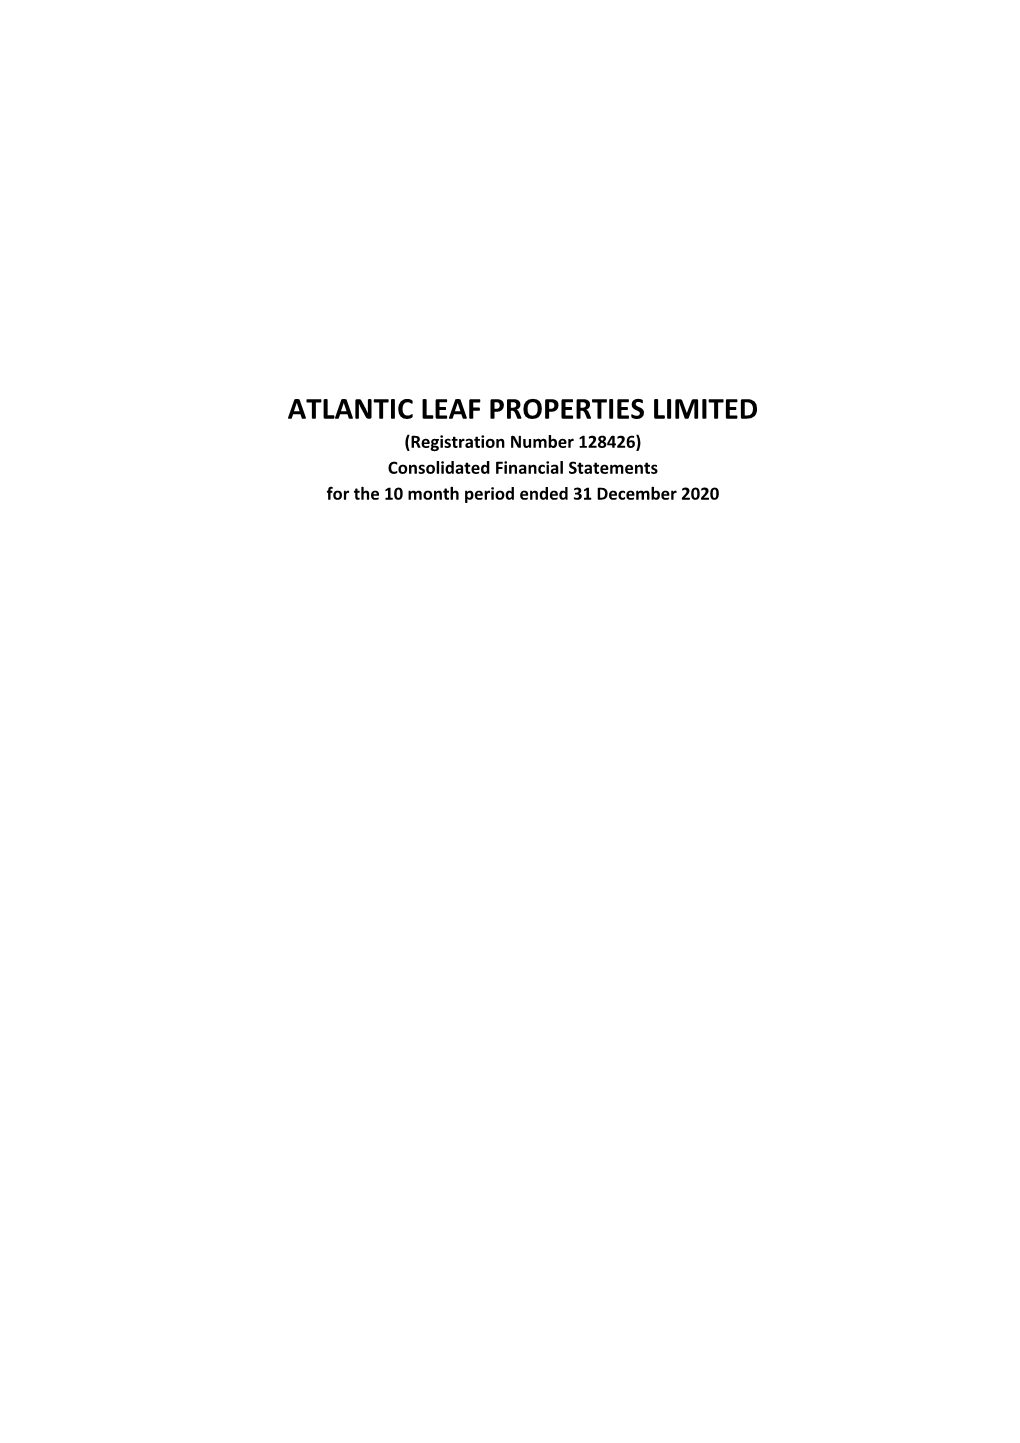 Atlantic Leaf Properties Limited